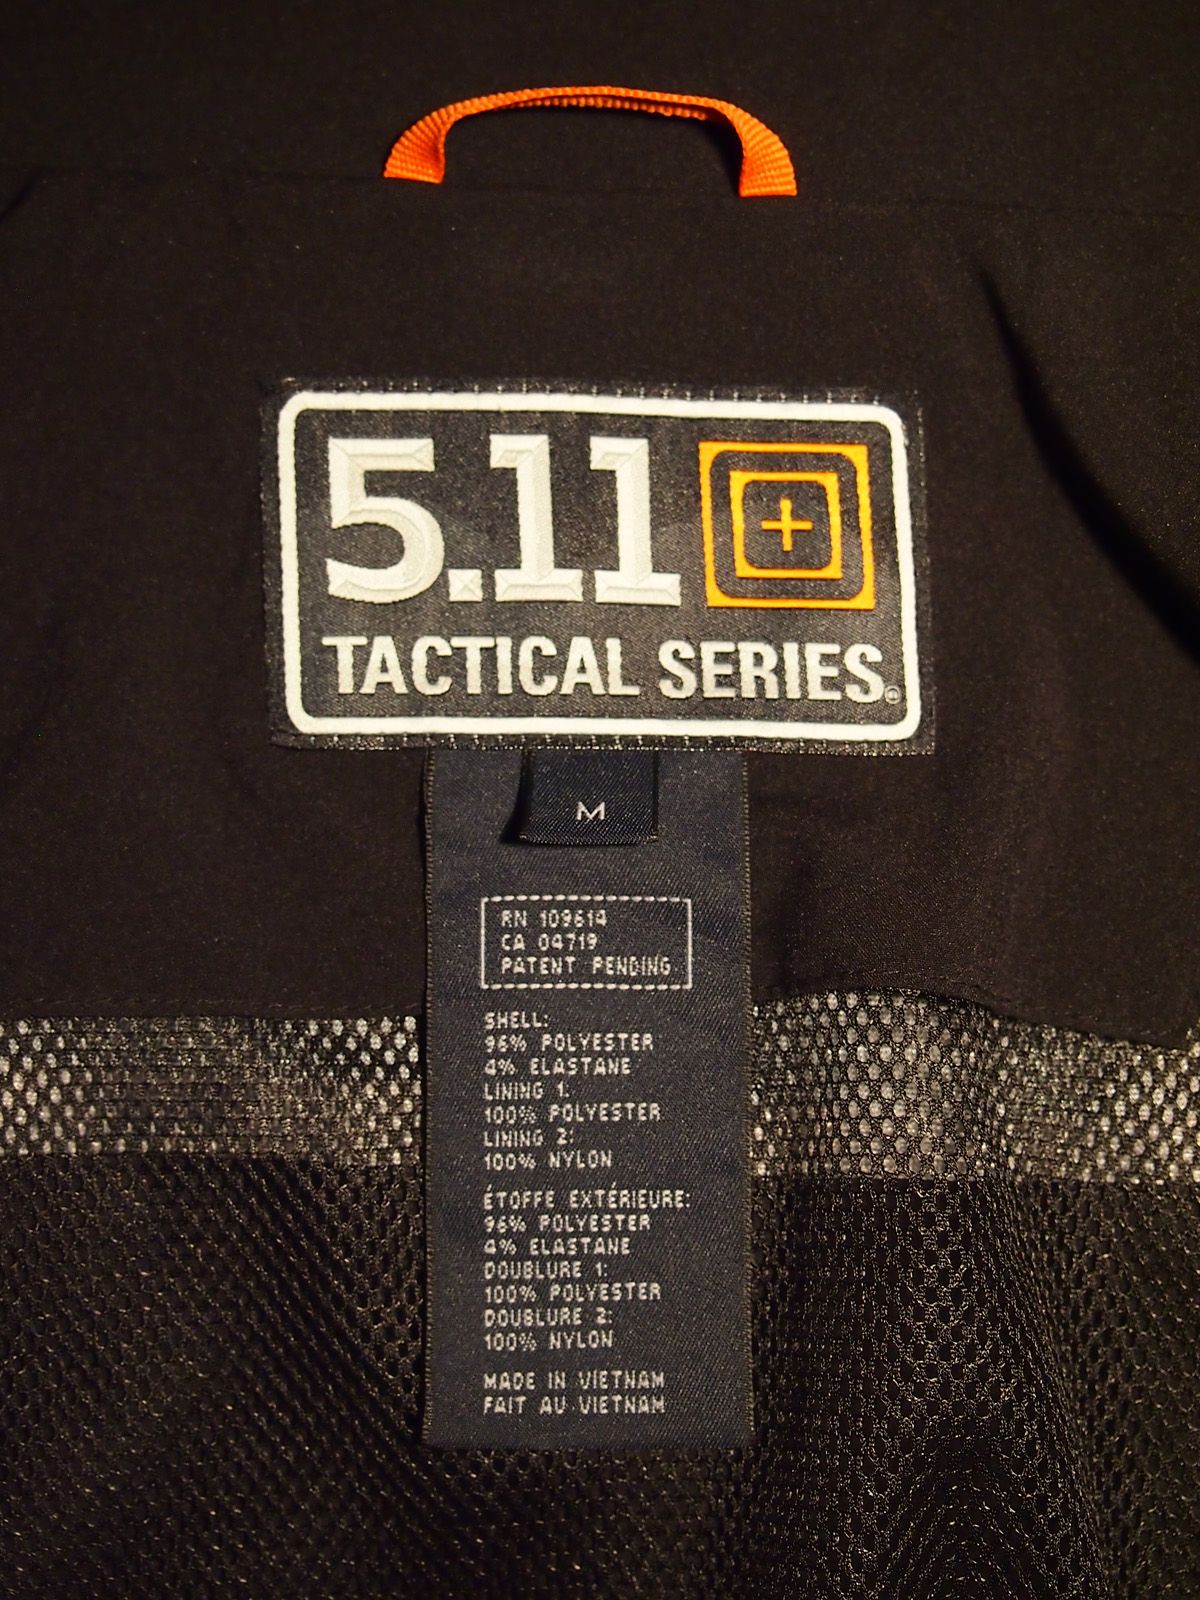 5.11 Tactical Sabre 2.0 Jacket review